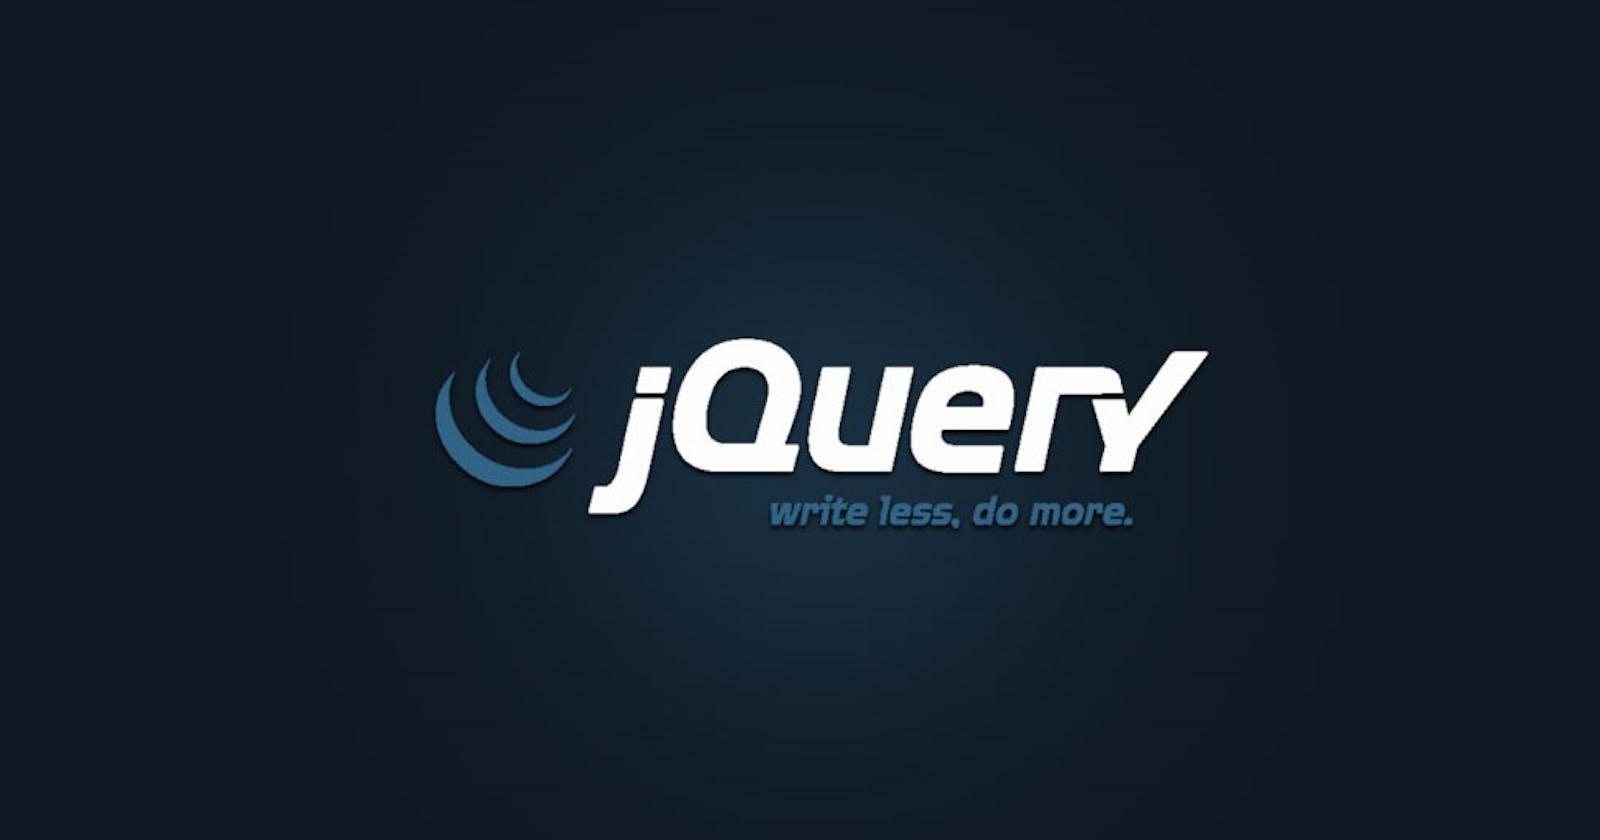 Event Handling Using JQuery